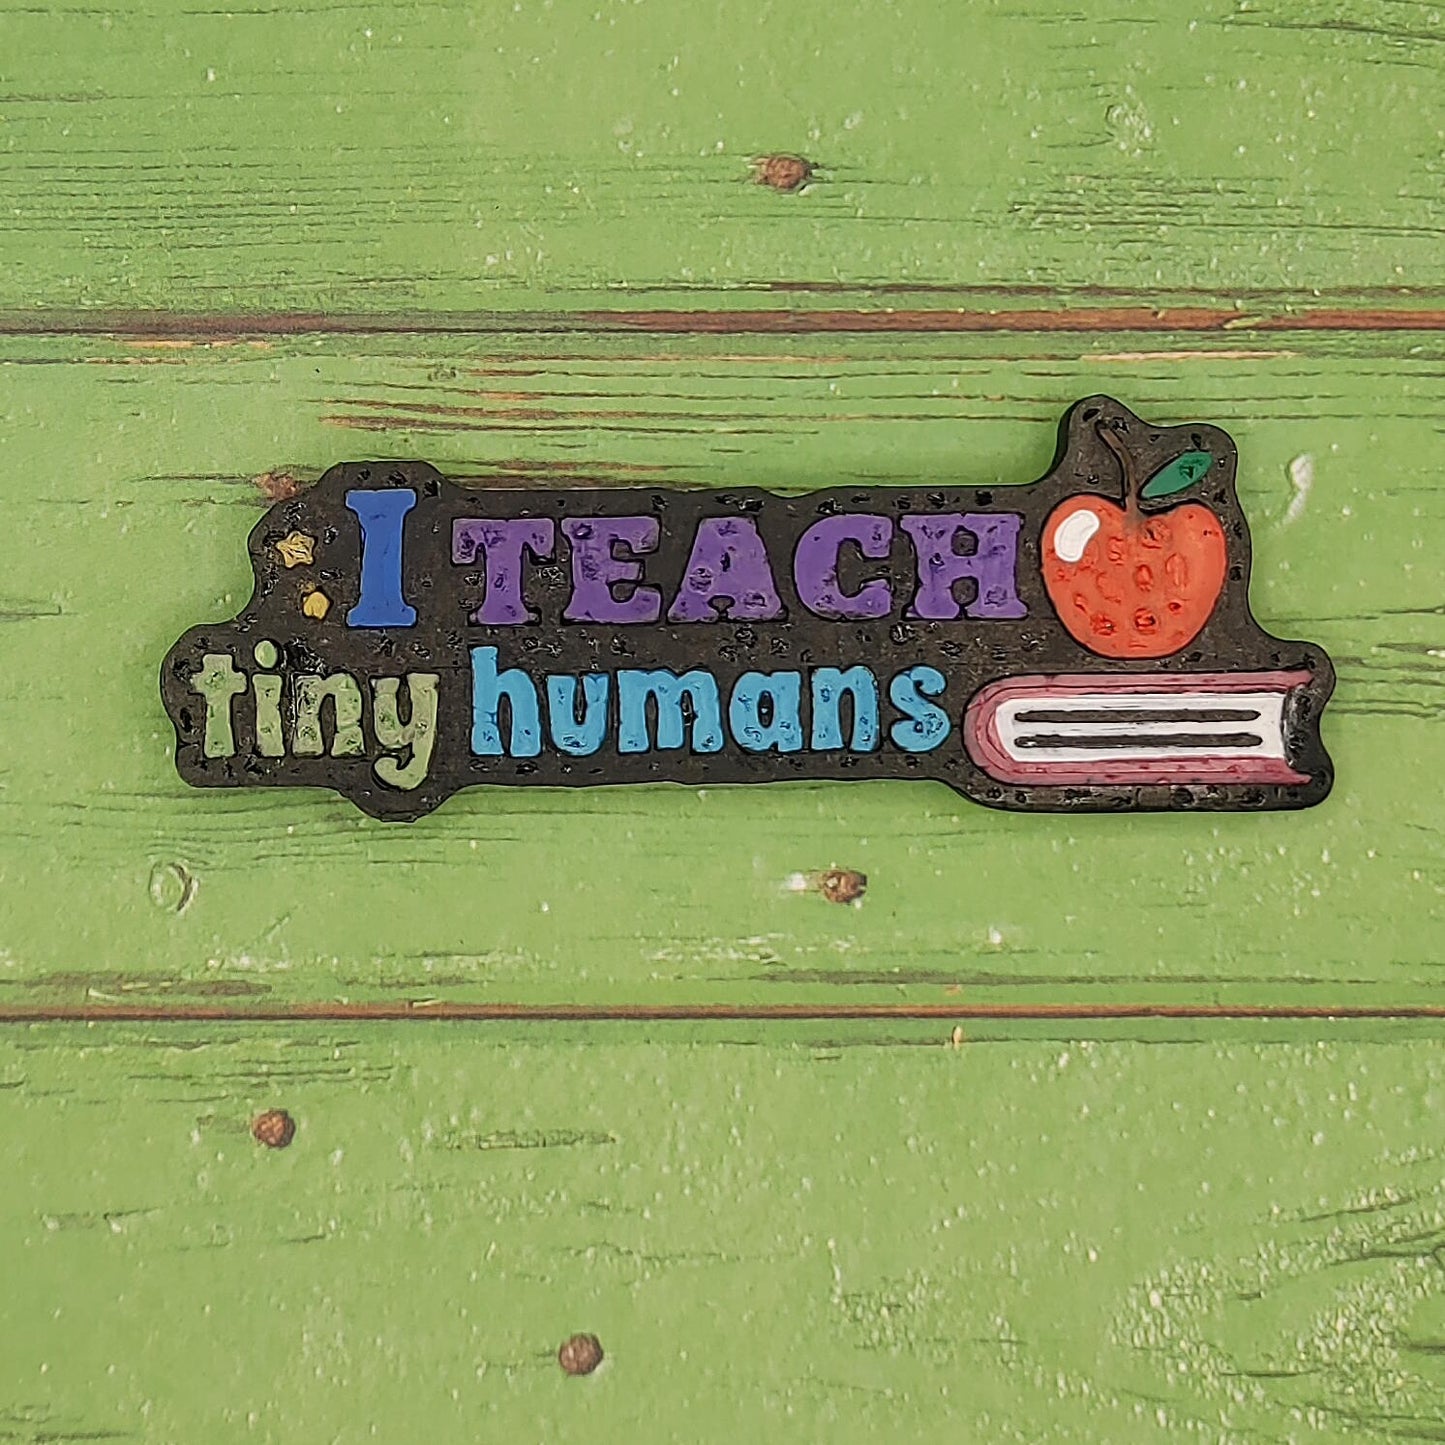 I Teach Tiny Humans - Silicone Freshie Mold